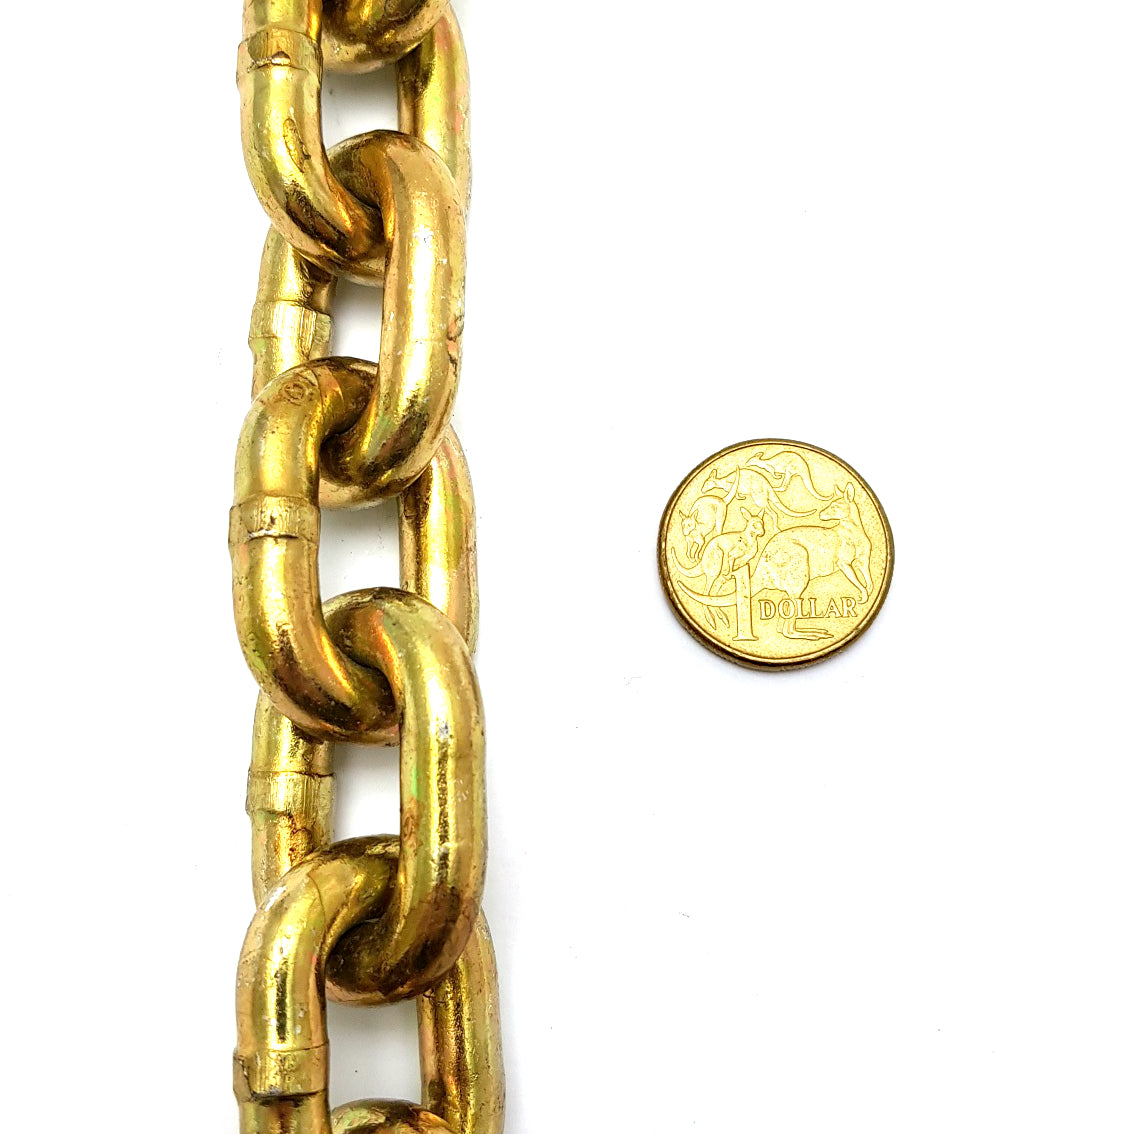 Hardened security chain, size: 8mm x 50cm long. Melbourne, Australia.